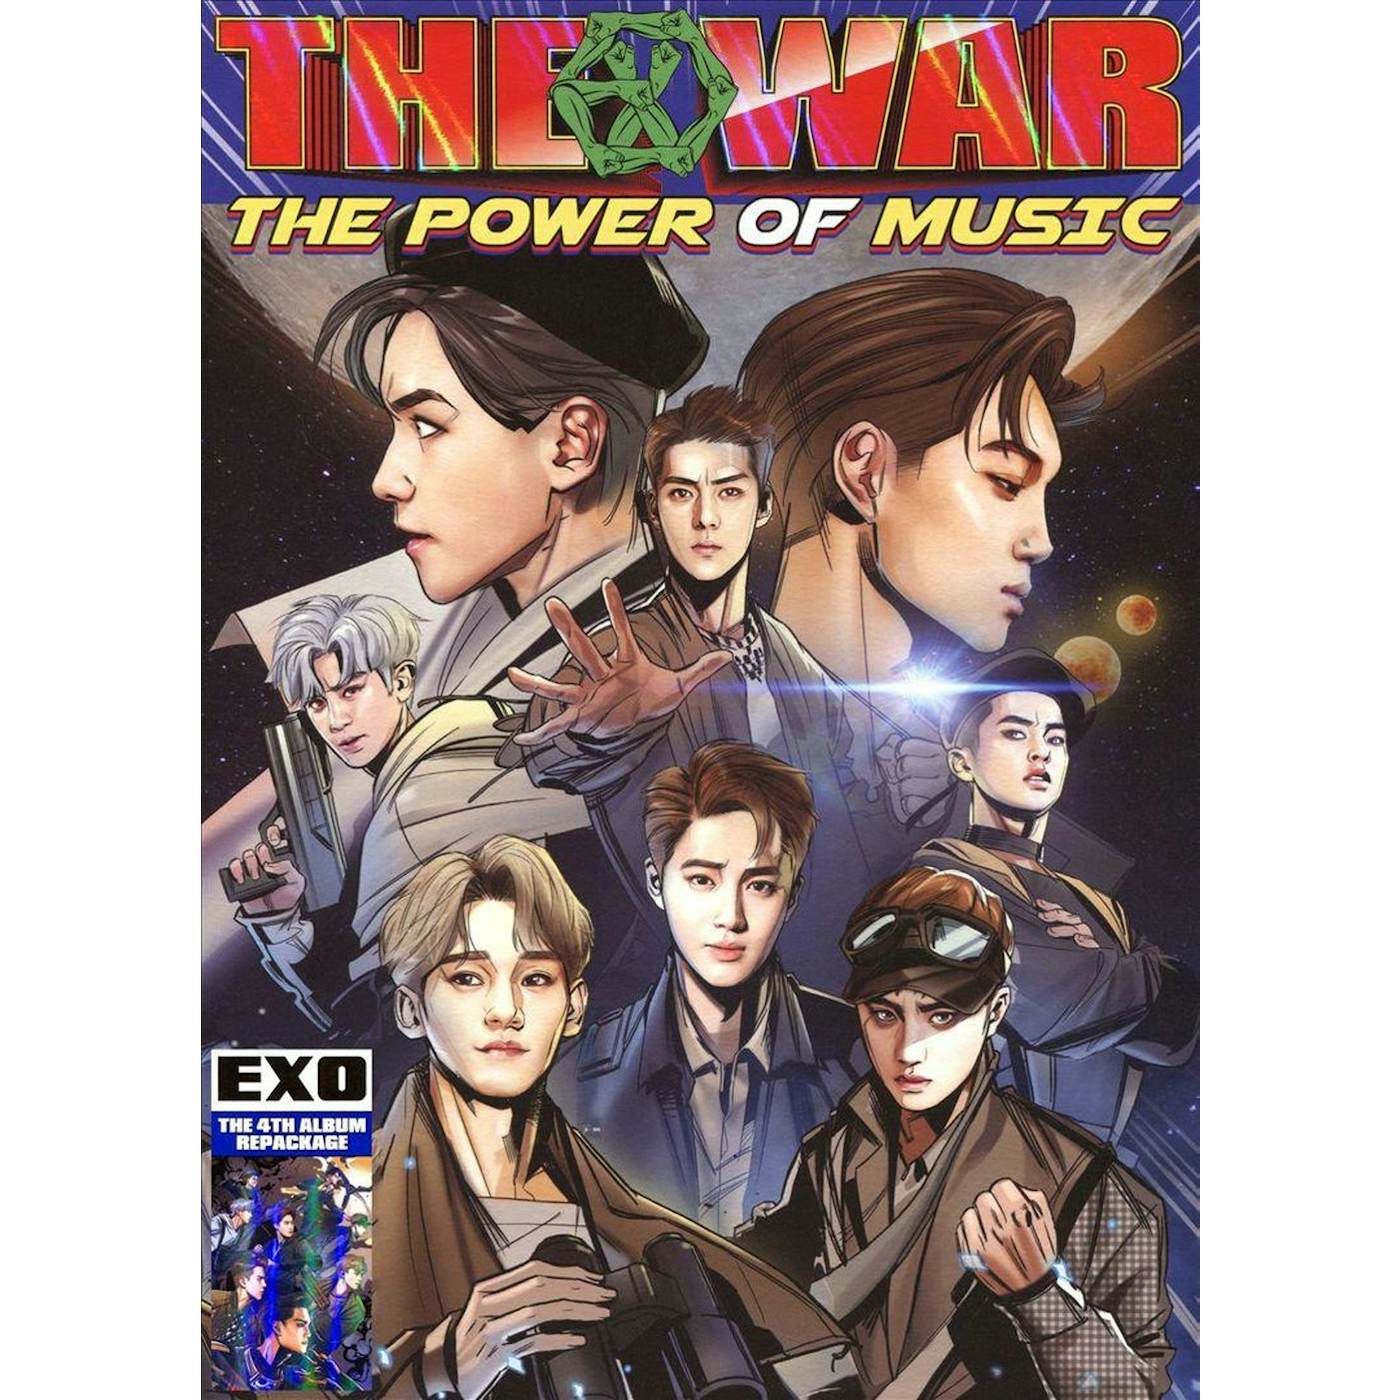 EXO VOL 4. REPACKAGE (THE WAR: THE POWER OF MUSIC) KOREAN VERSION CD